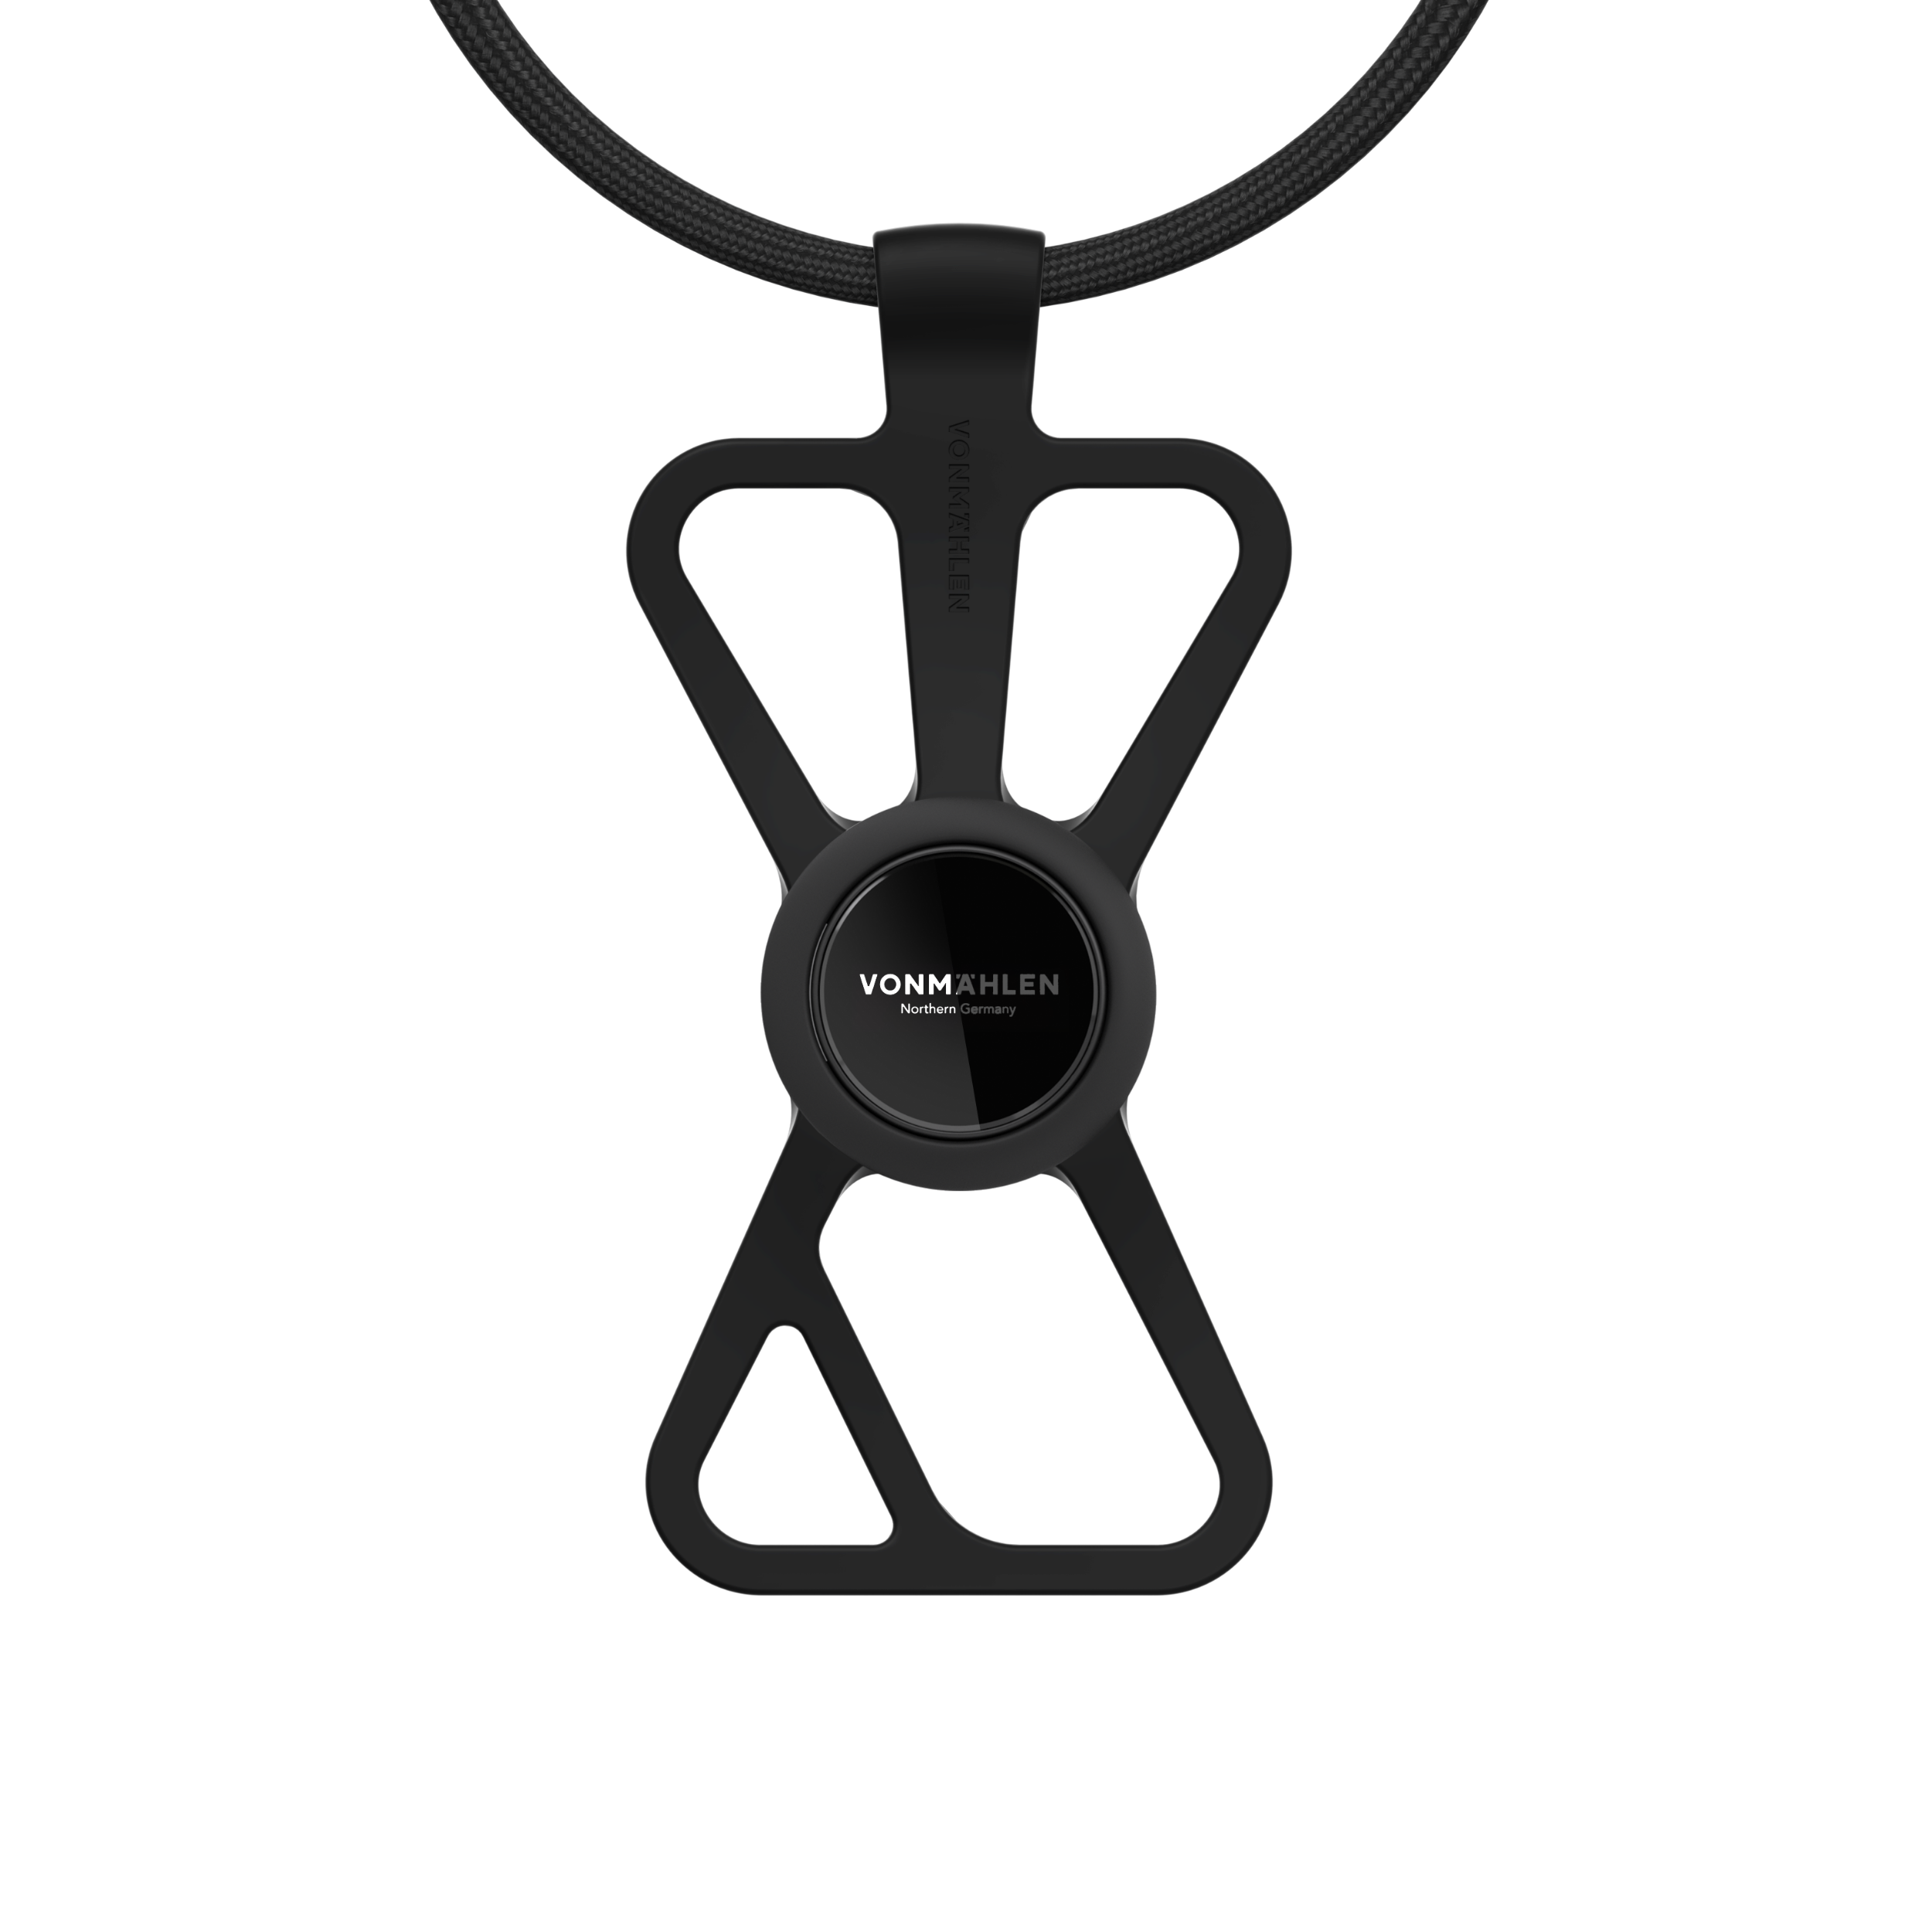 Vonmaehlen Infinity Plus Universal Phone Case Strap Lanyard + Backflip Grip/Holder - Black